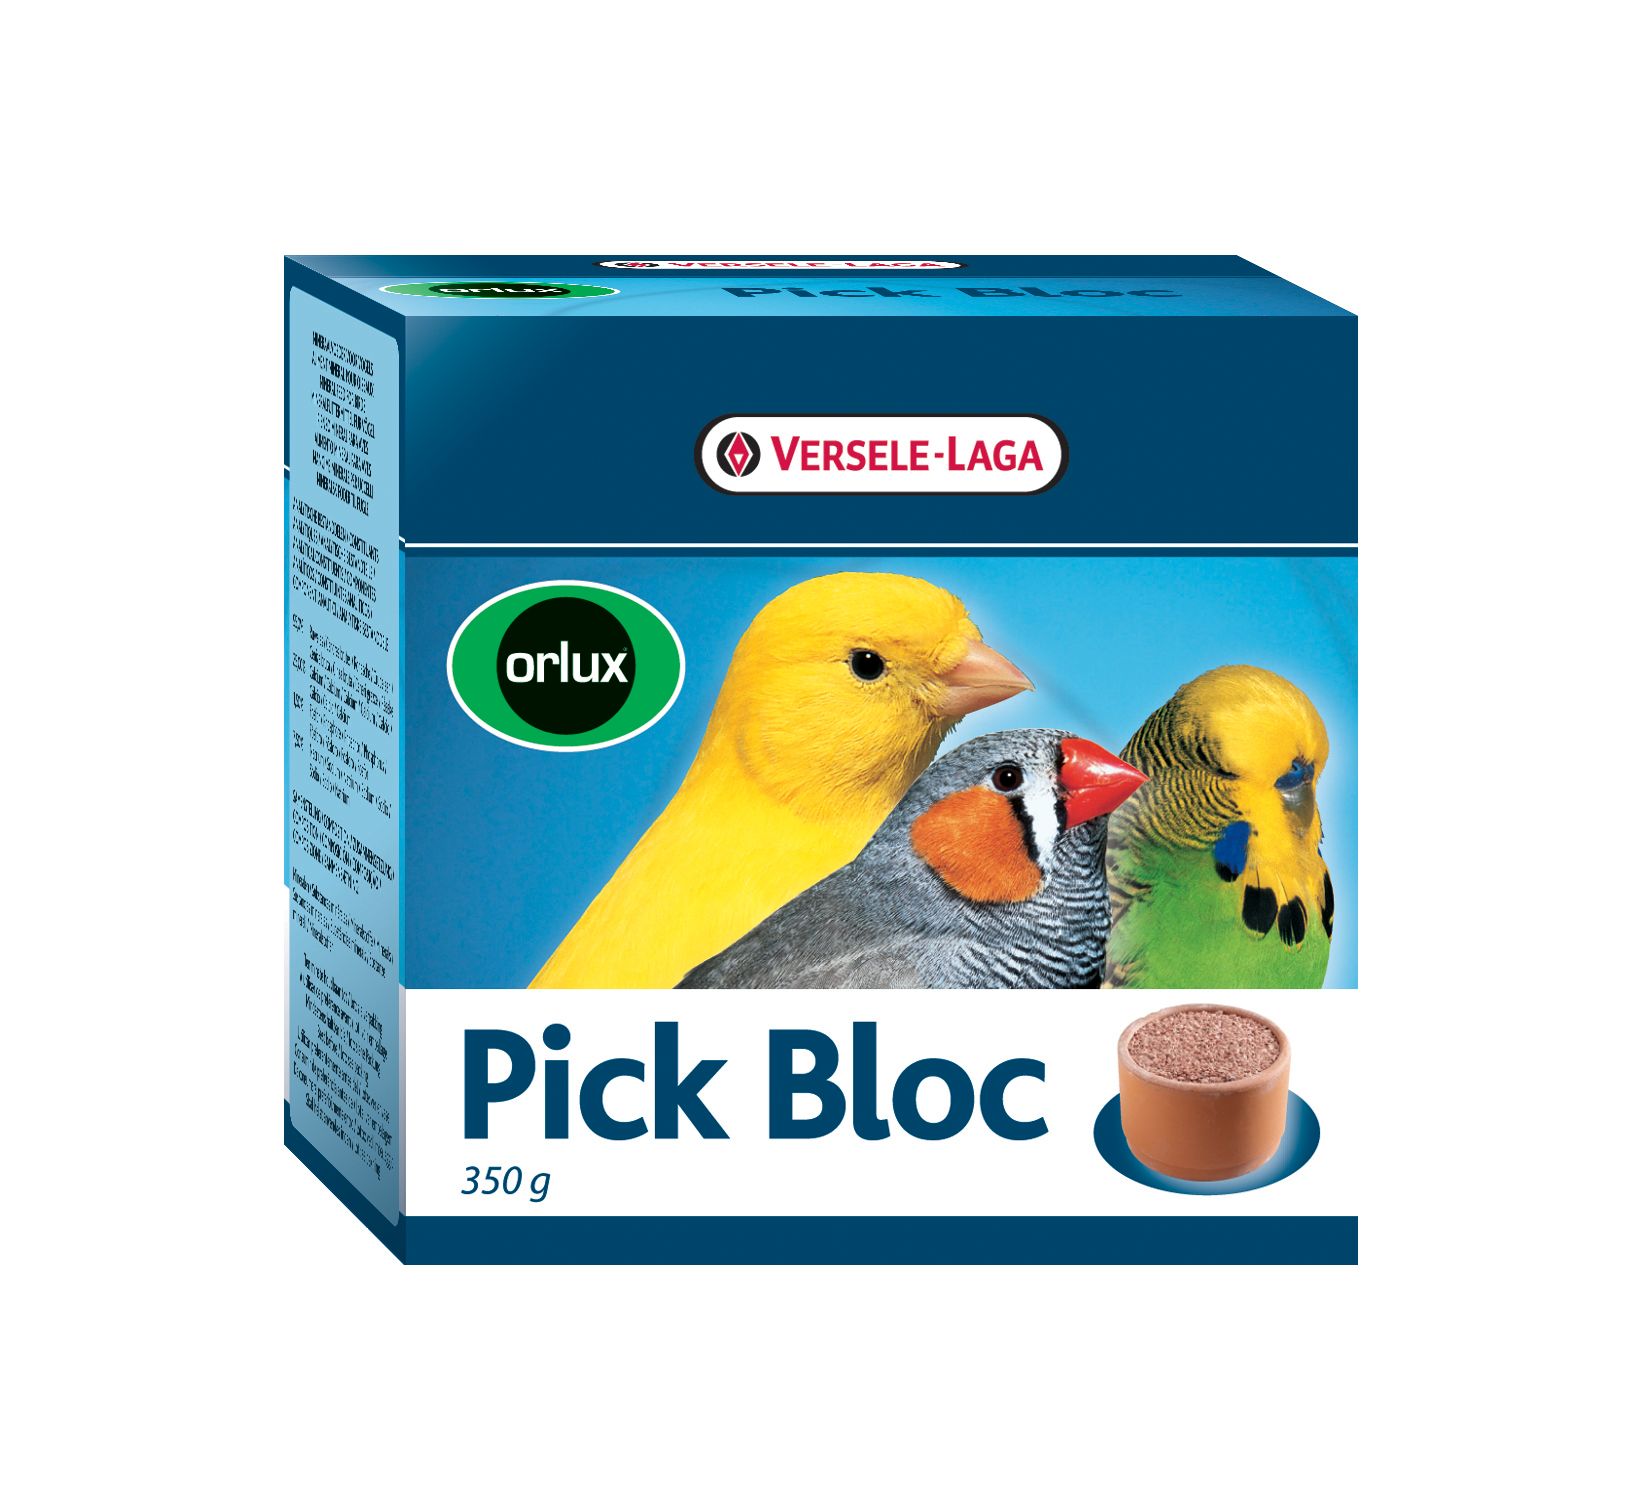 Pick-bloc bloque p/picotear pajaro 350g